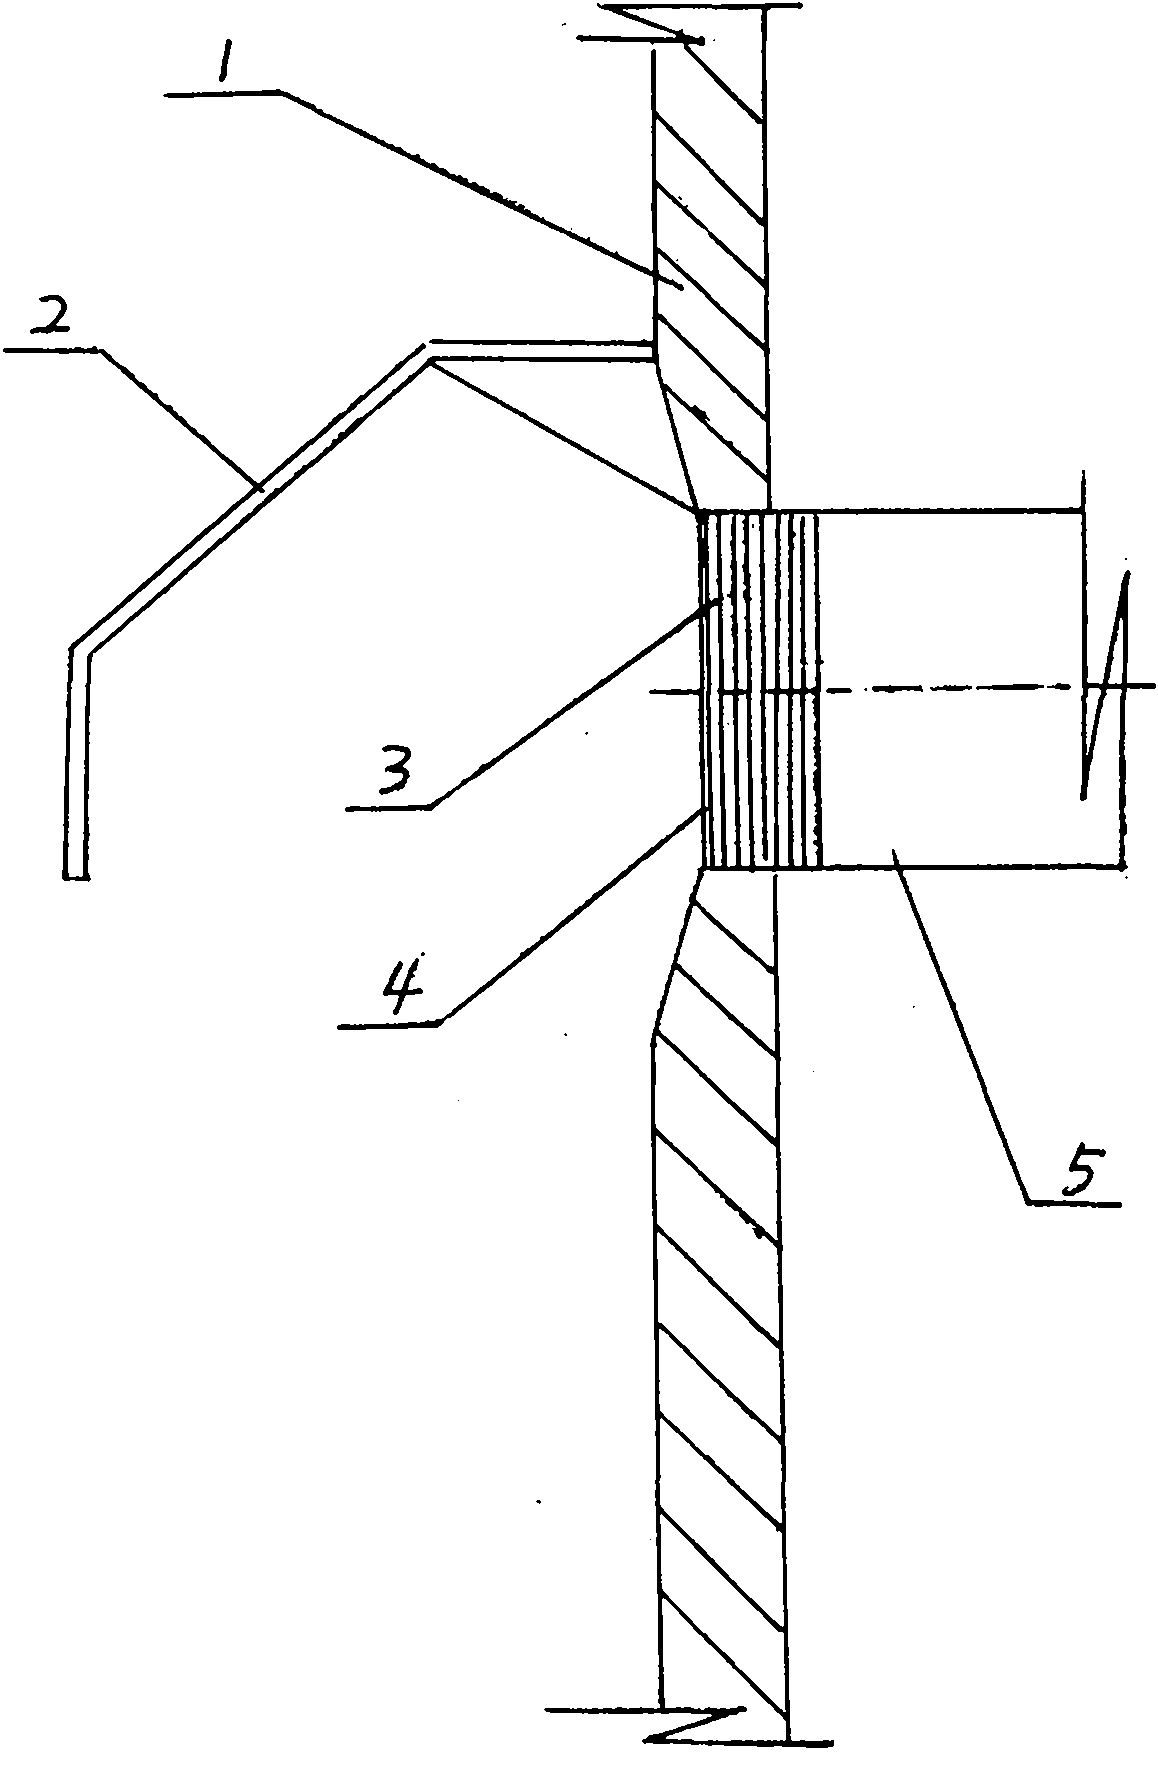 Purifying method and system of kitchen lampblack and lampblack separator